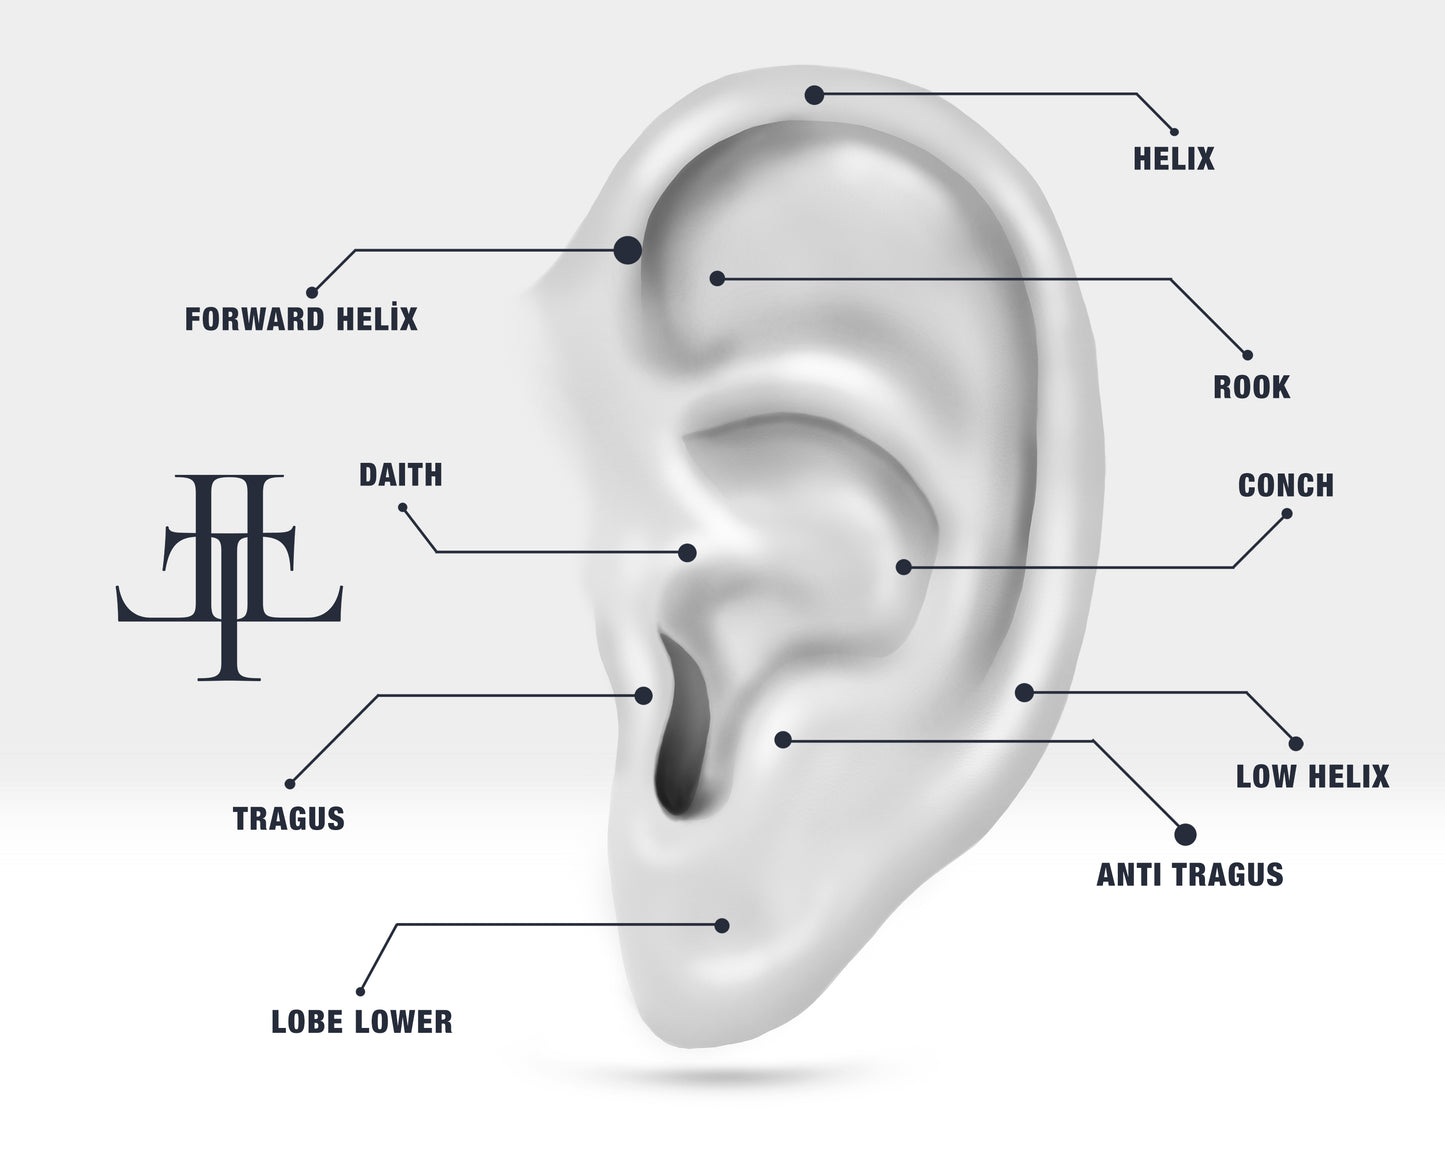 Cartilage Hoop,Trio Pieces Round Cut Black Diamond Clicker,Single Earring,14K Gold,16G(1.2mm)